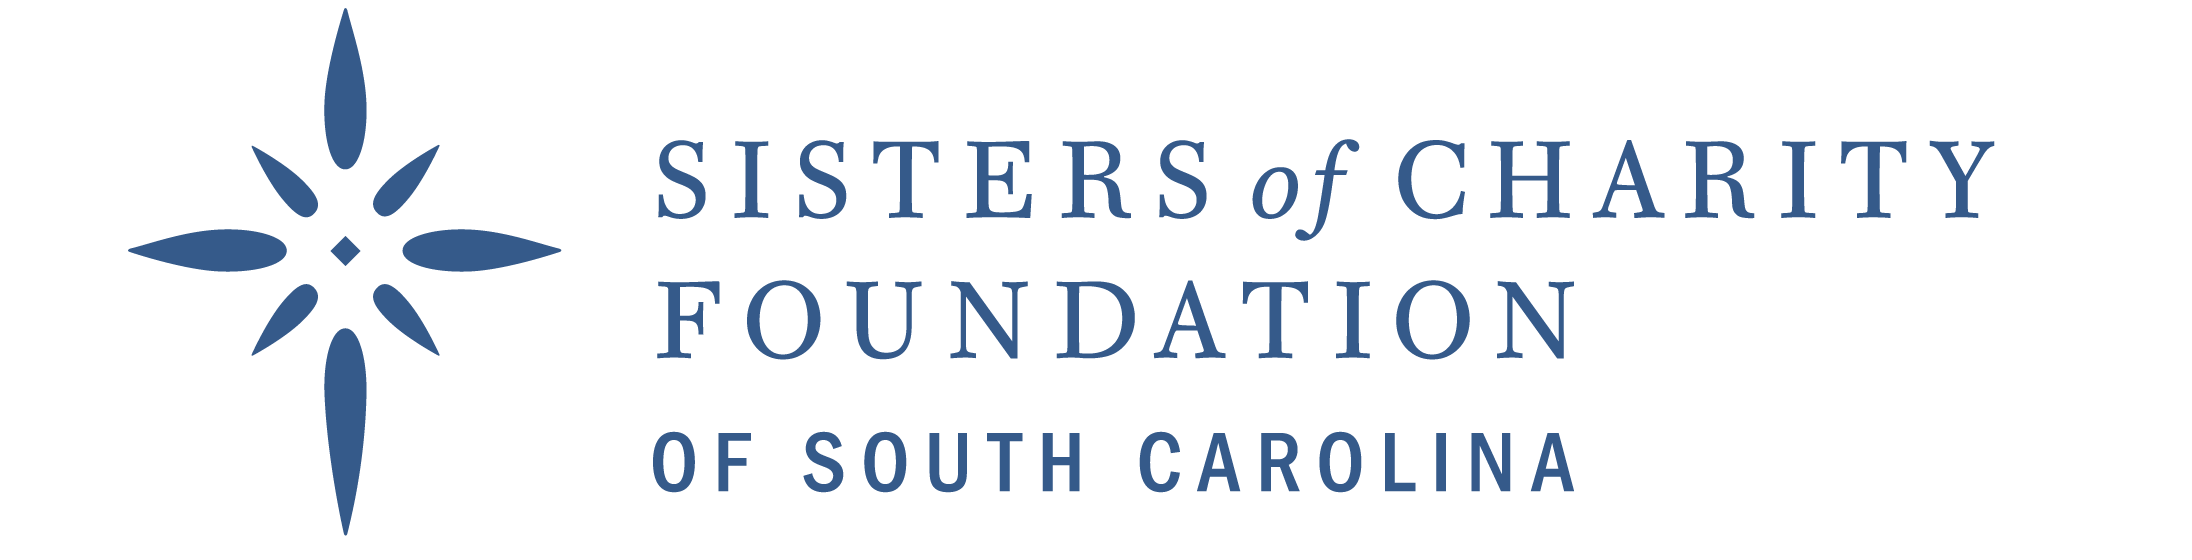 Sisters of Charity Foundation of South Carolina Logo